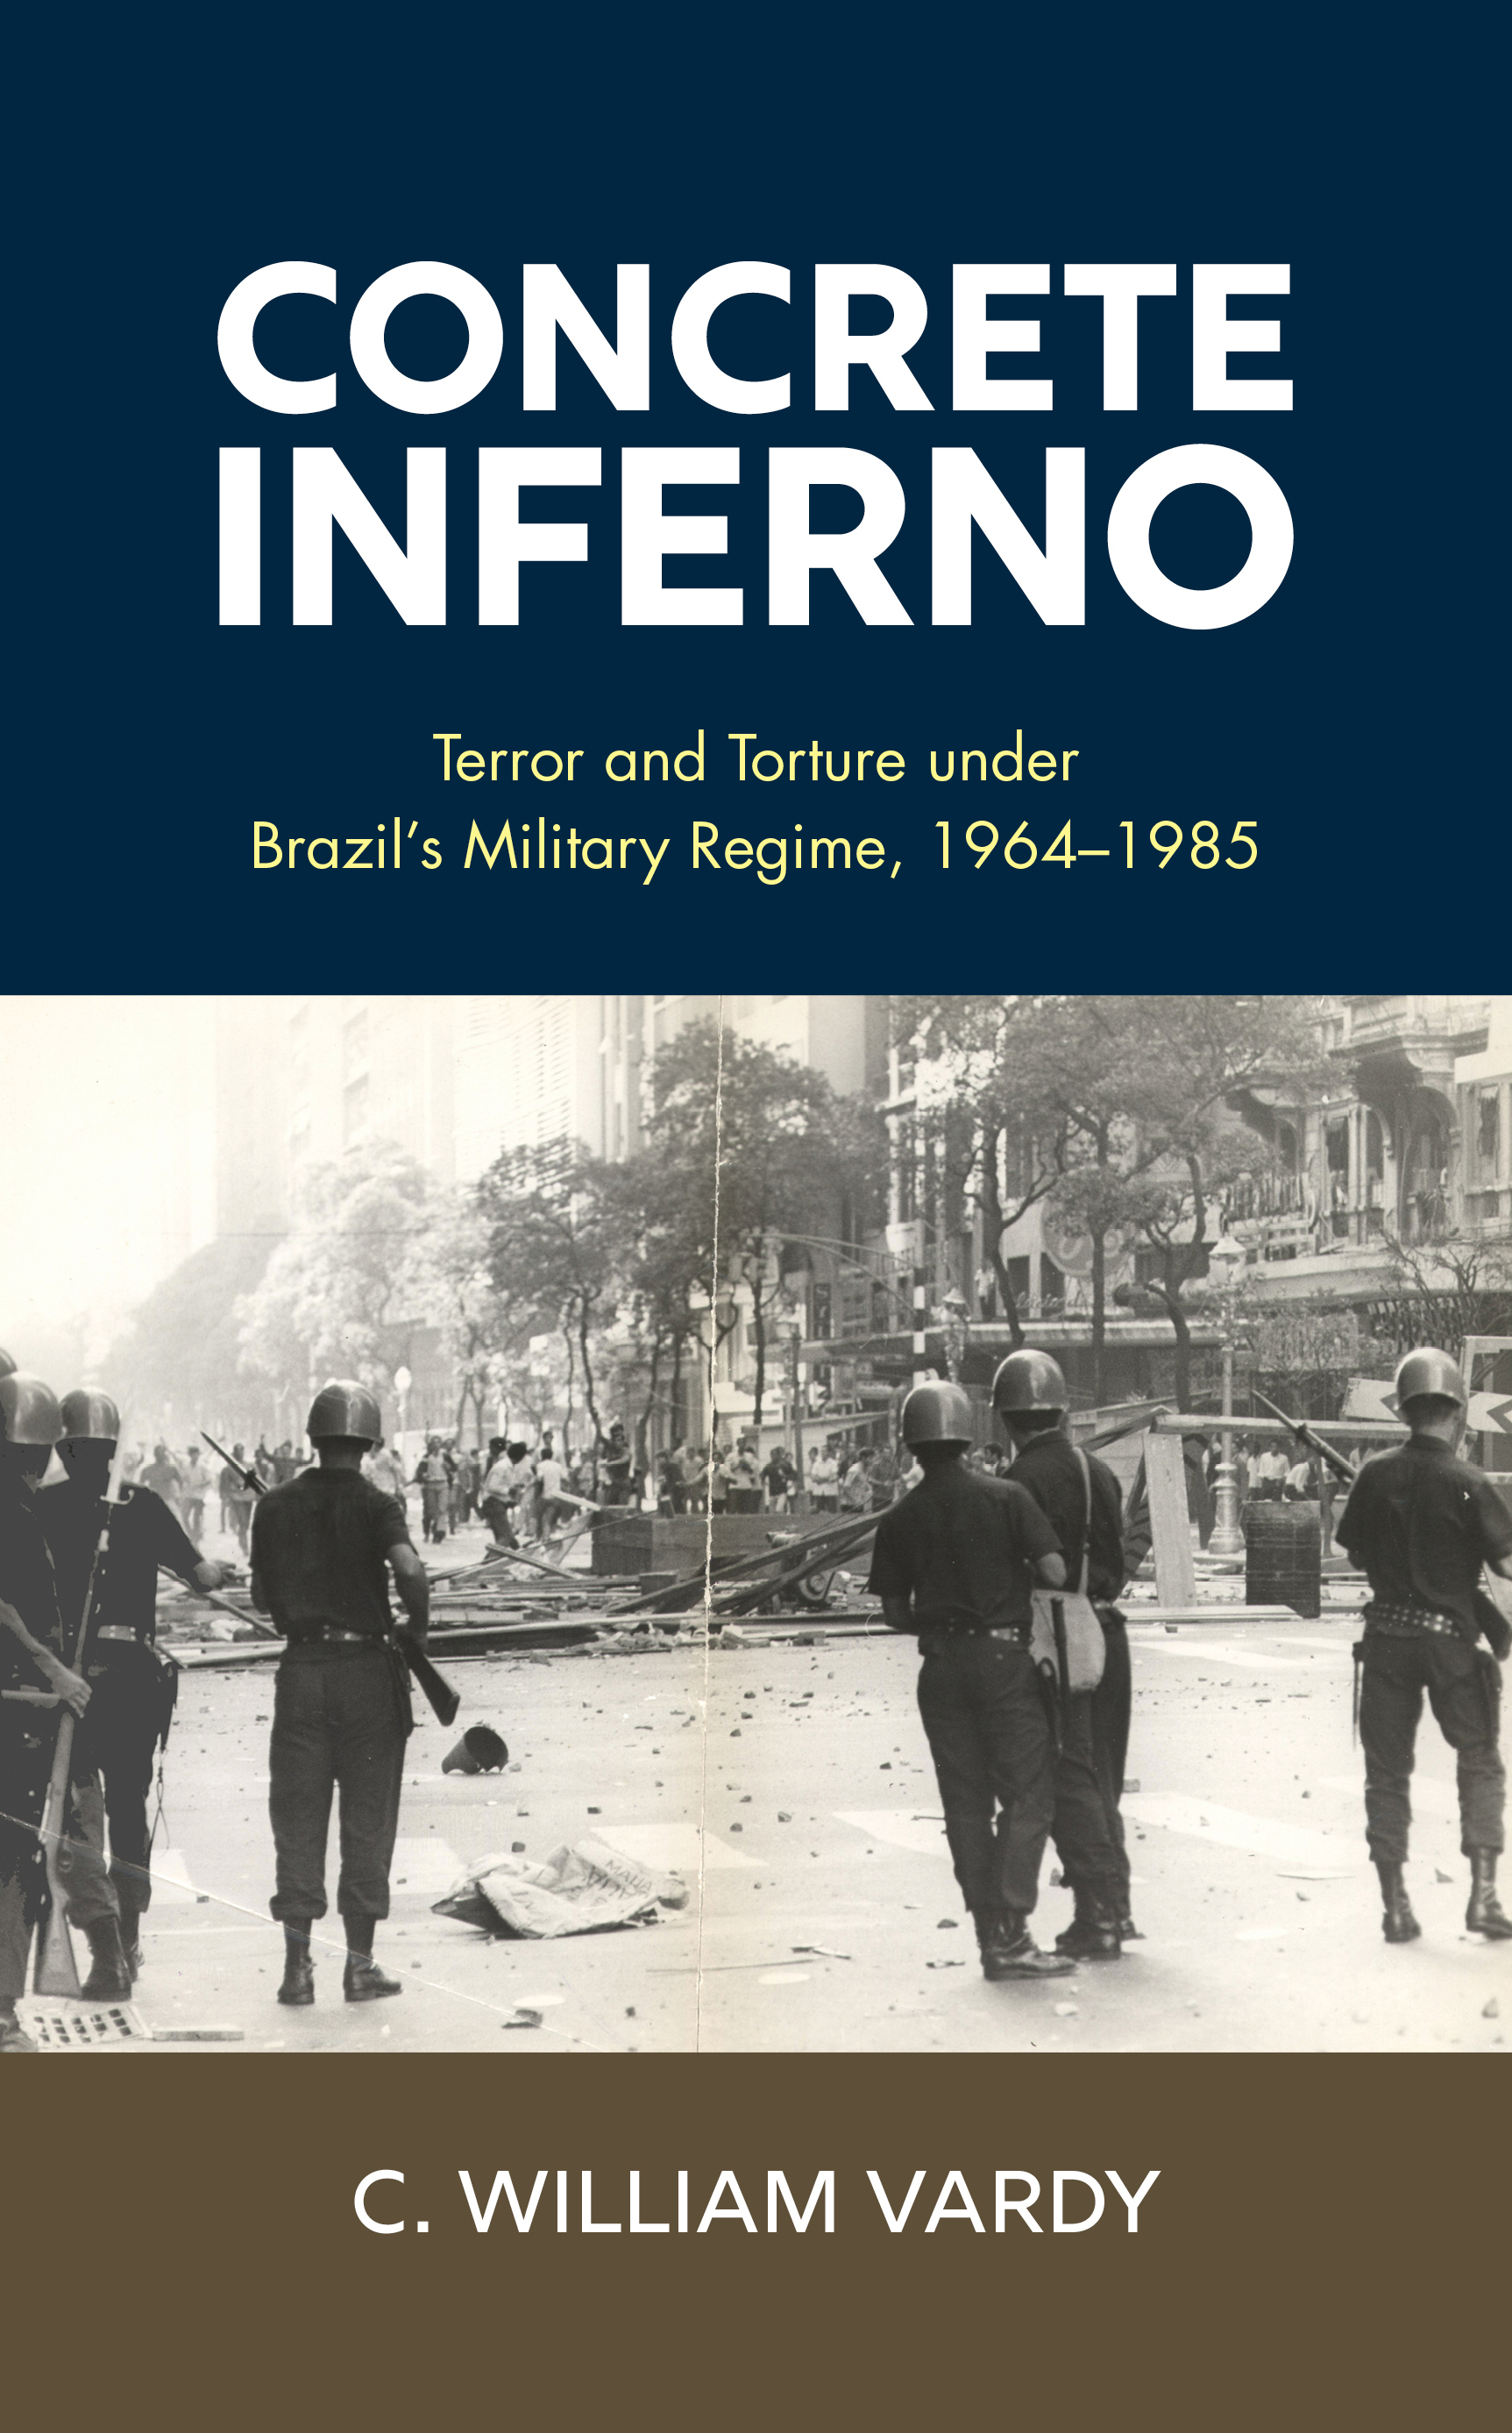 Concrete Inferno: Terror and Torture under Brazil's Military Regime, 1964-1985